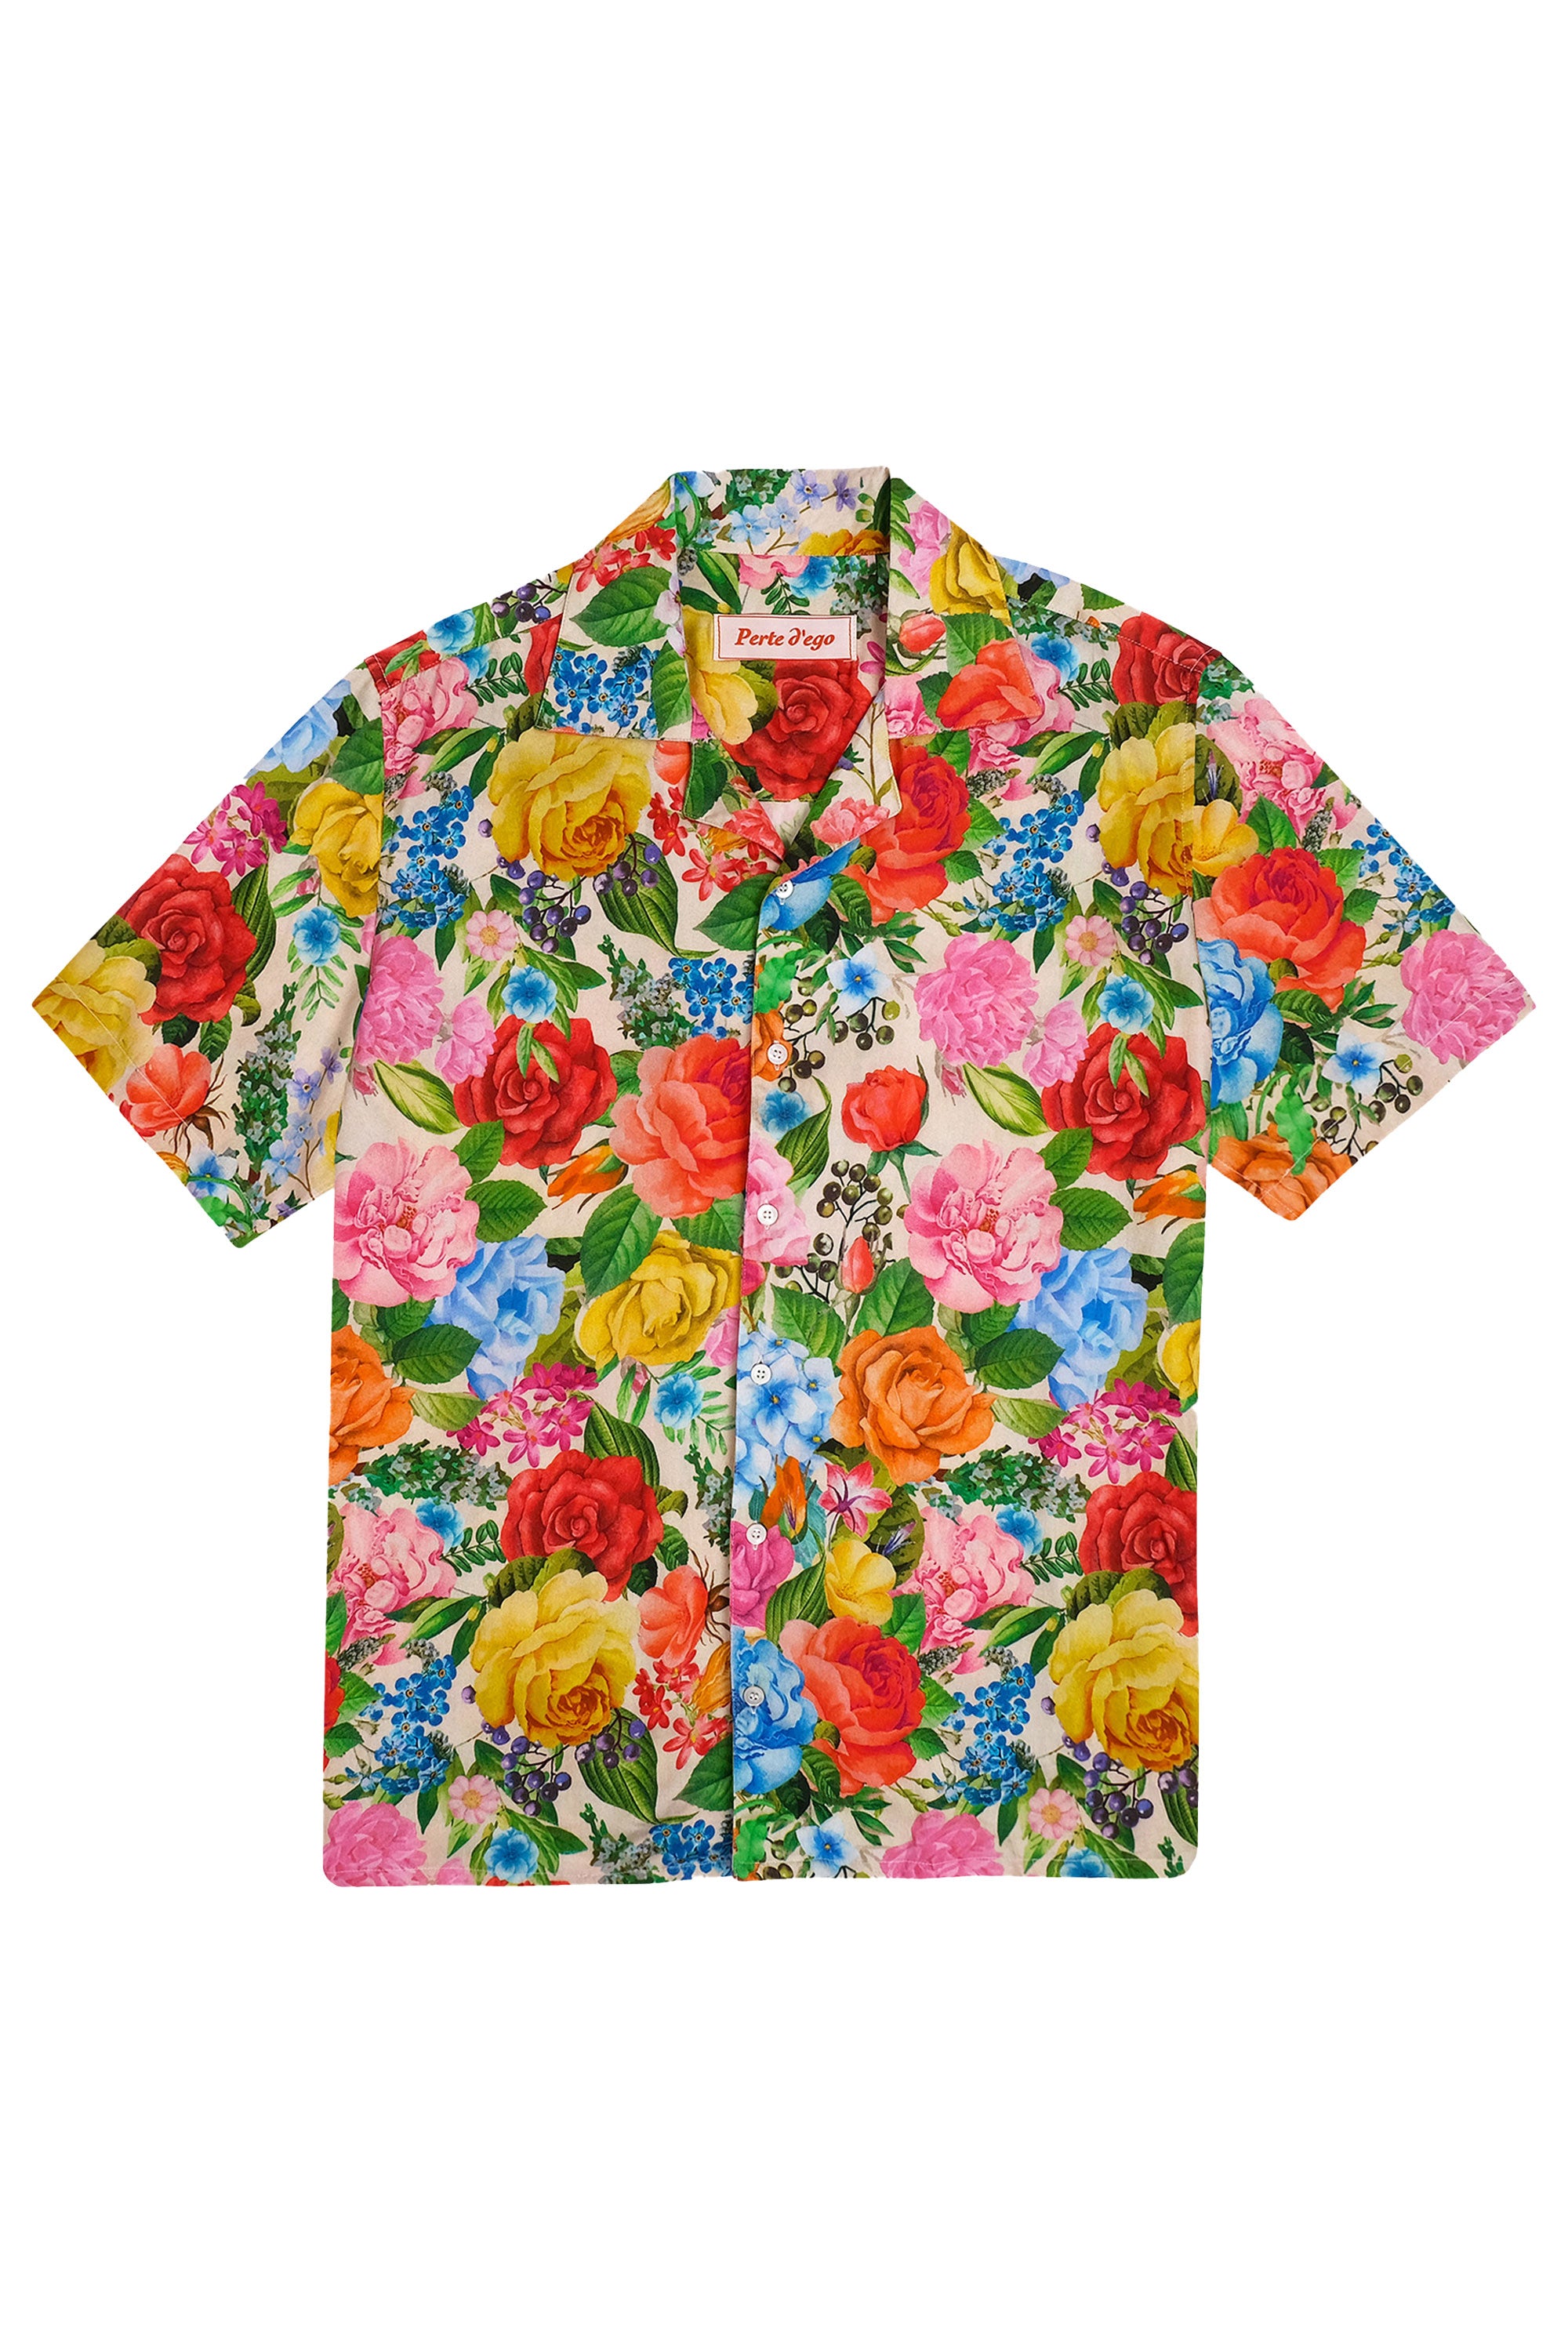 Versace Brand Hawaiian Shirt Shorts -  Worldwide Shipping